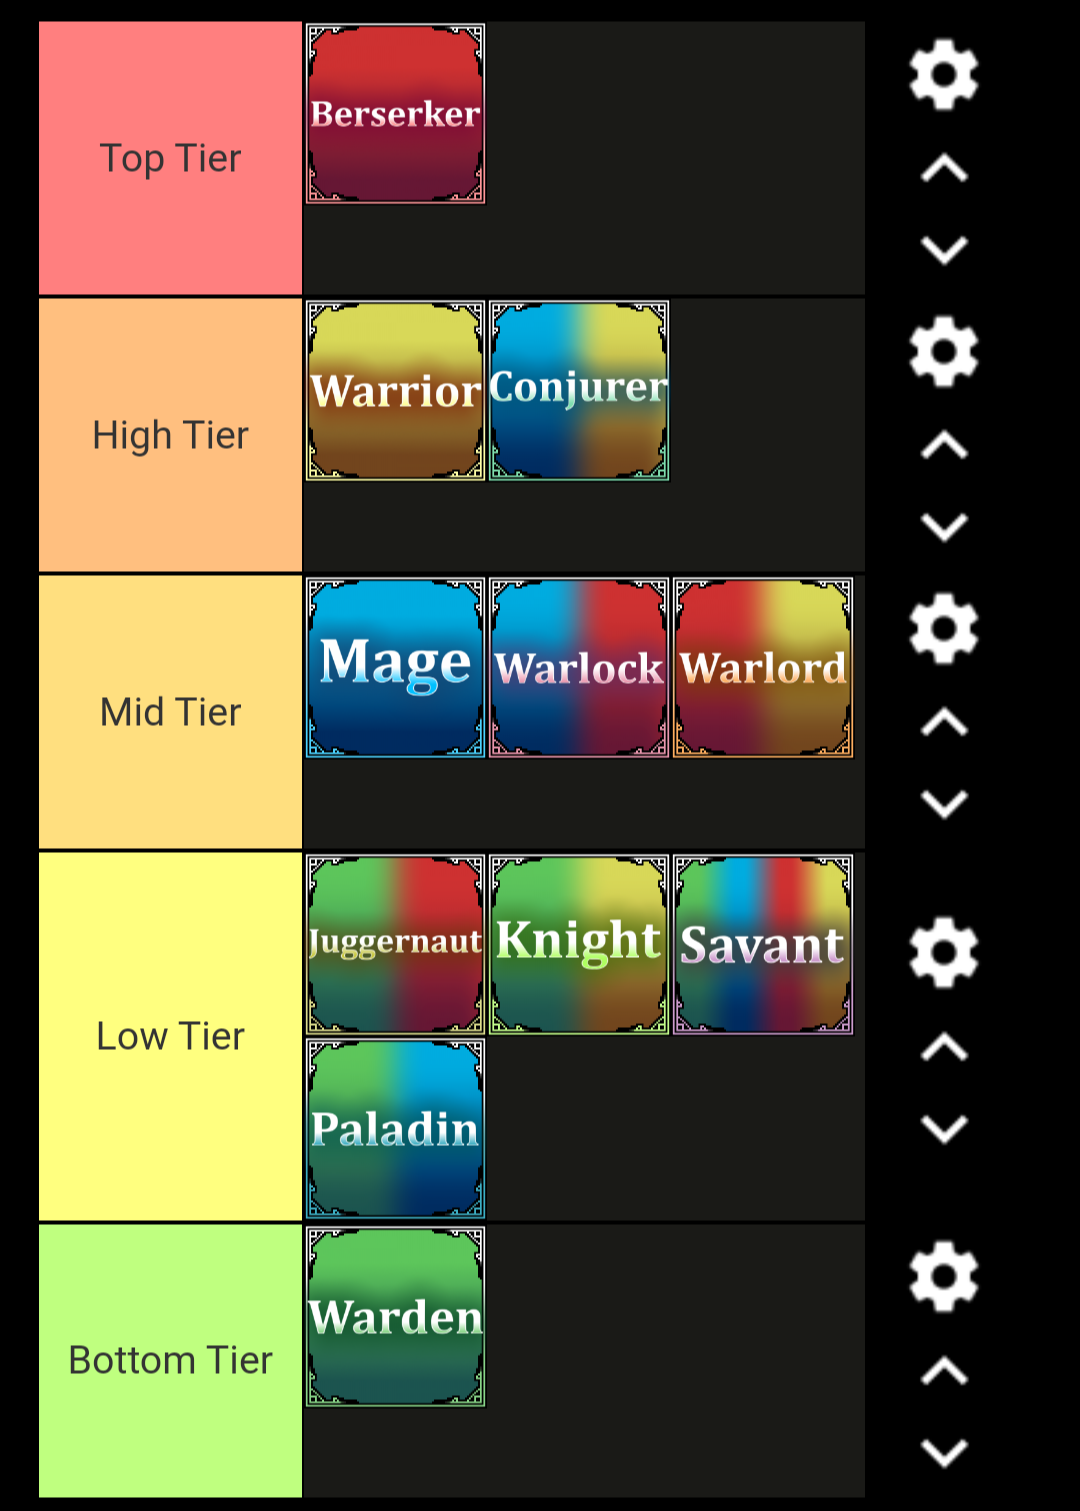 Arcane Odyssey Magic Tier List (Community Rankings) - TierMaker